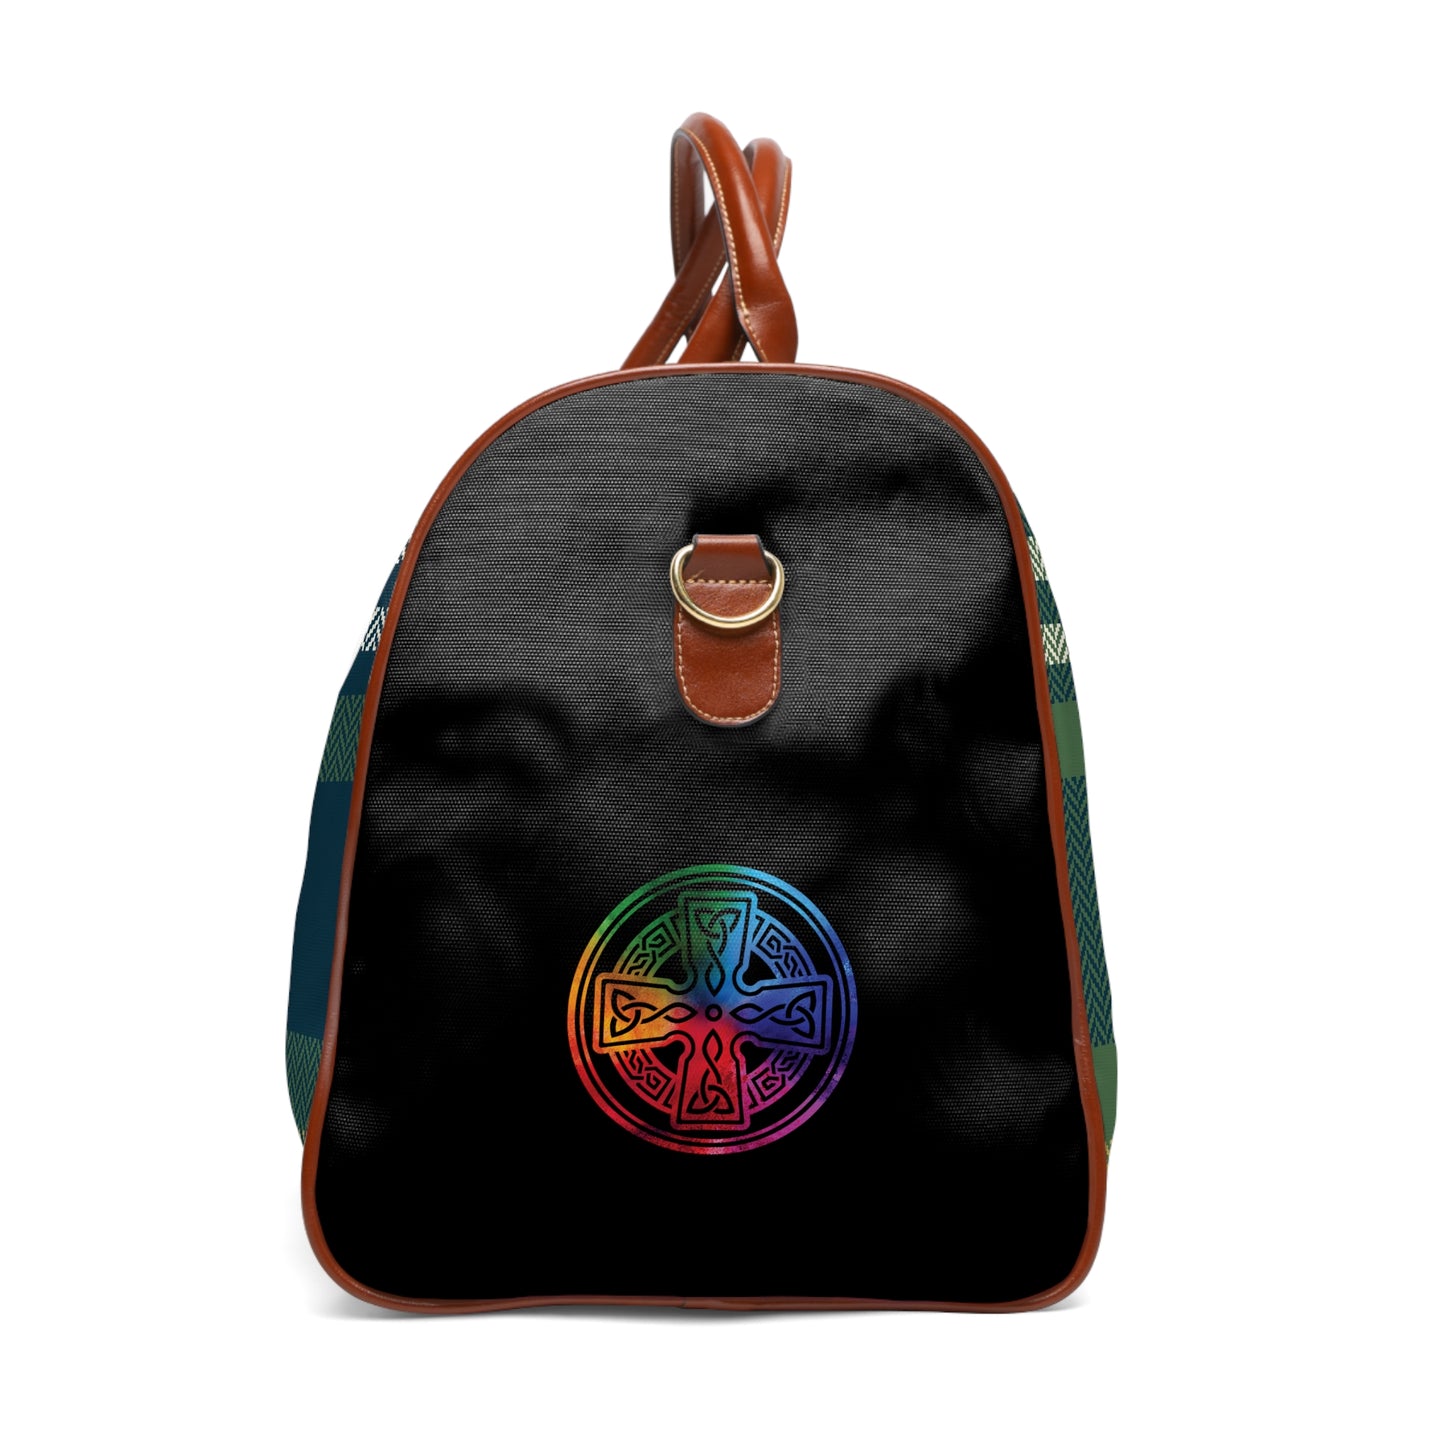 Balbriggan Travel Bag with Pride Celtic Shield